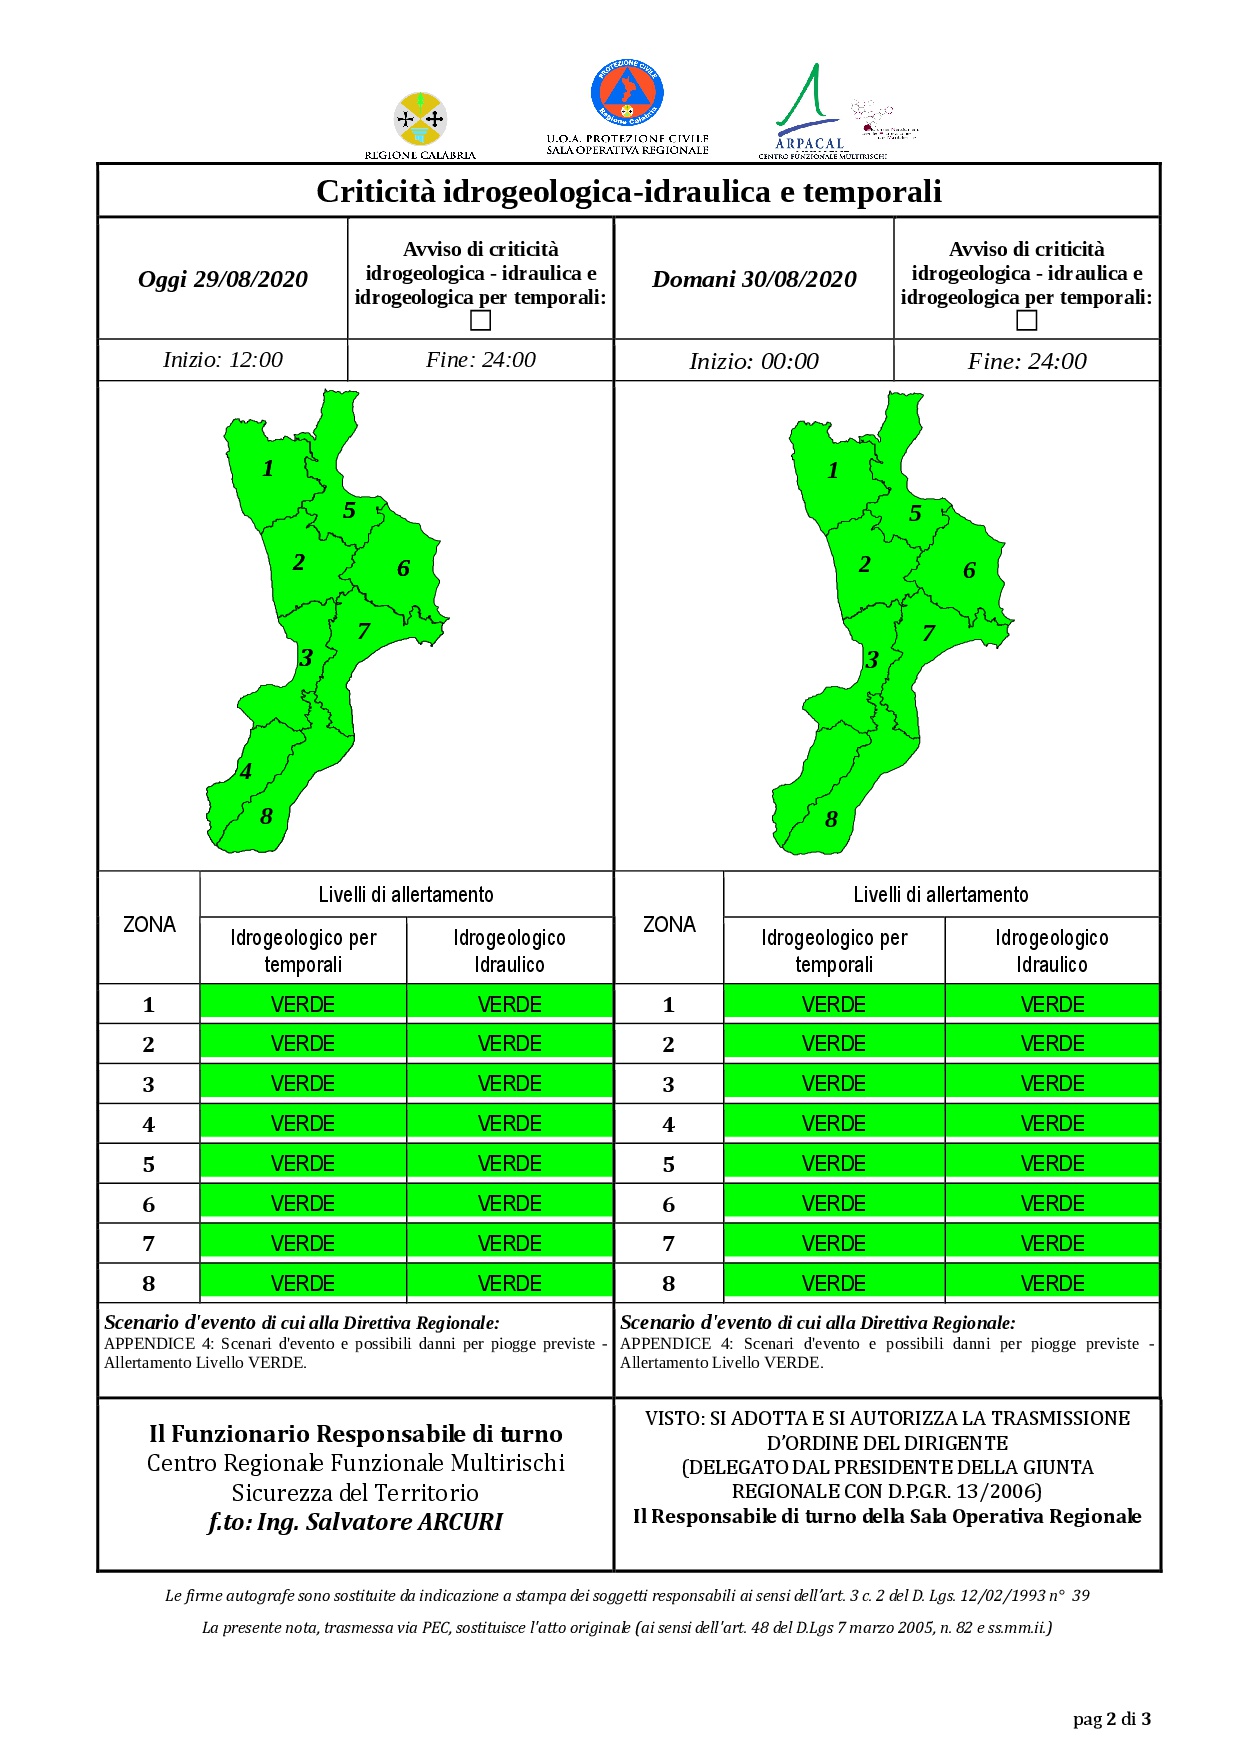 Criticità idrogeologica-idraulica e temporali in Calabria 29-08-2020